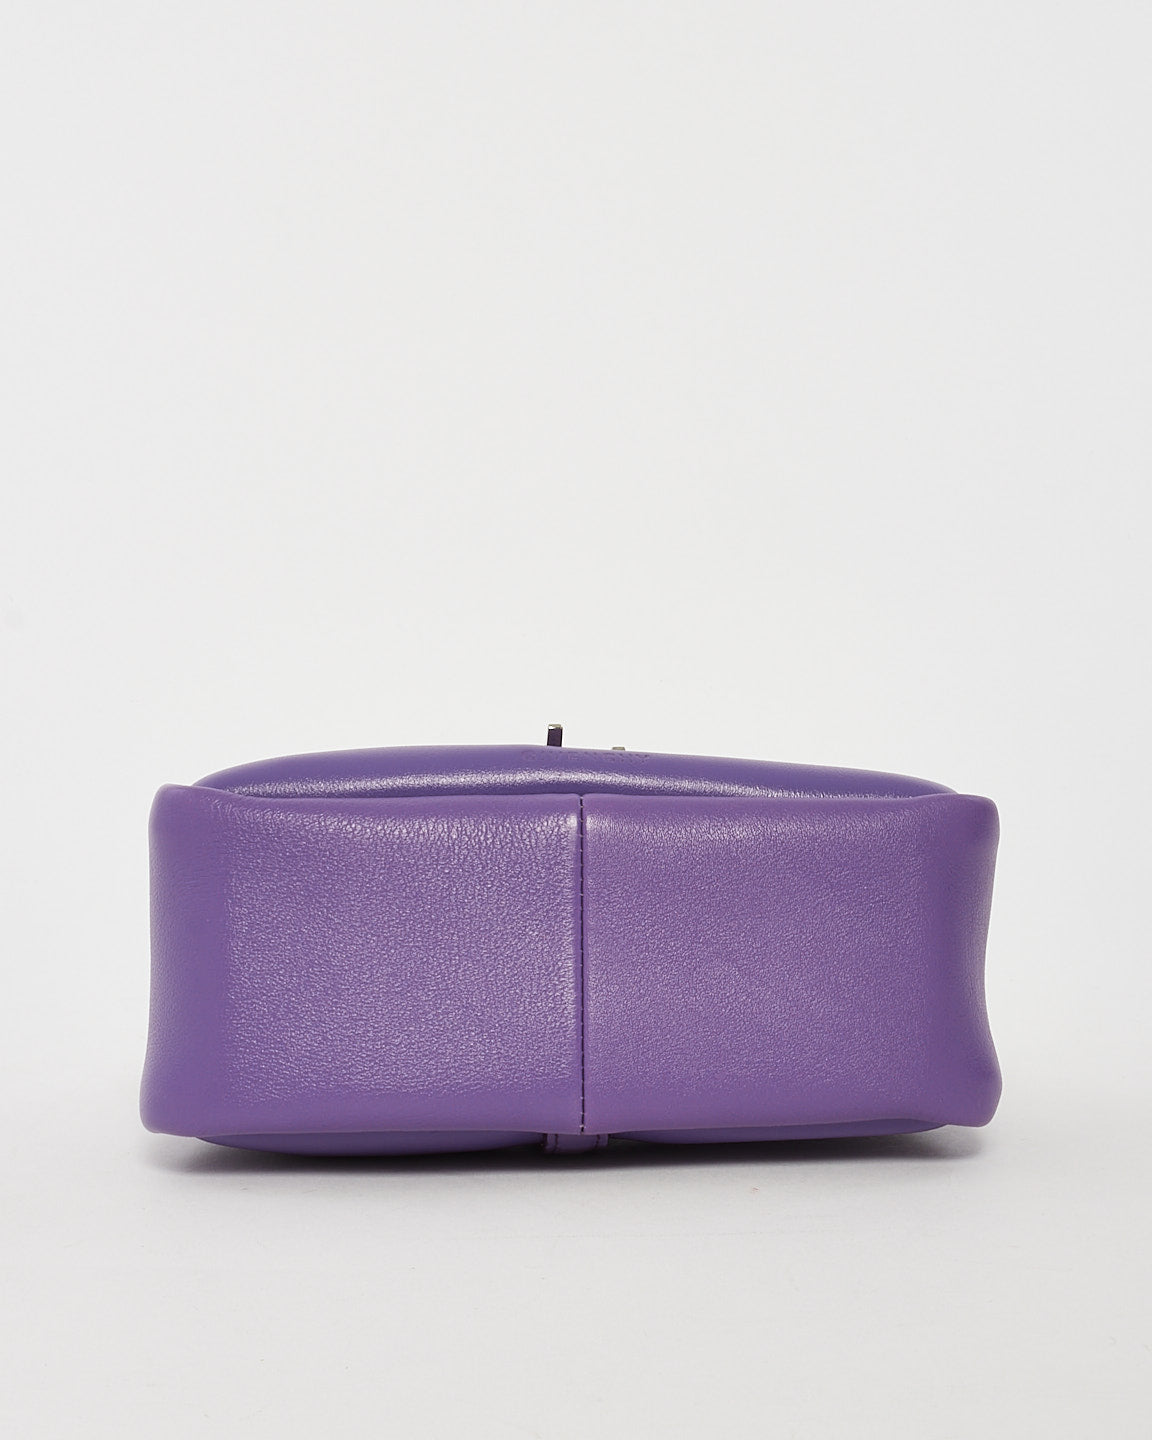 Givenchy Purple Leather G-Hobo Mini Shoulder Bag